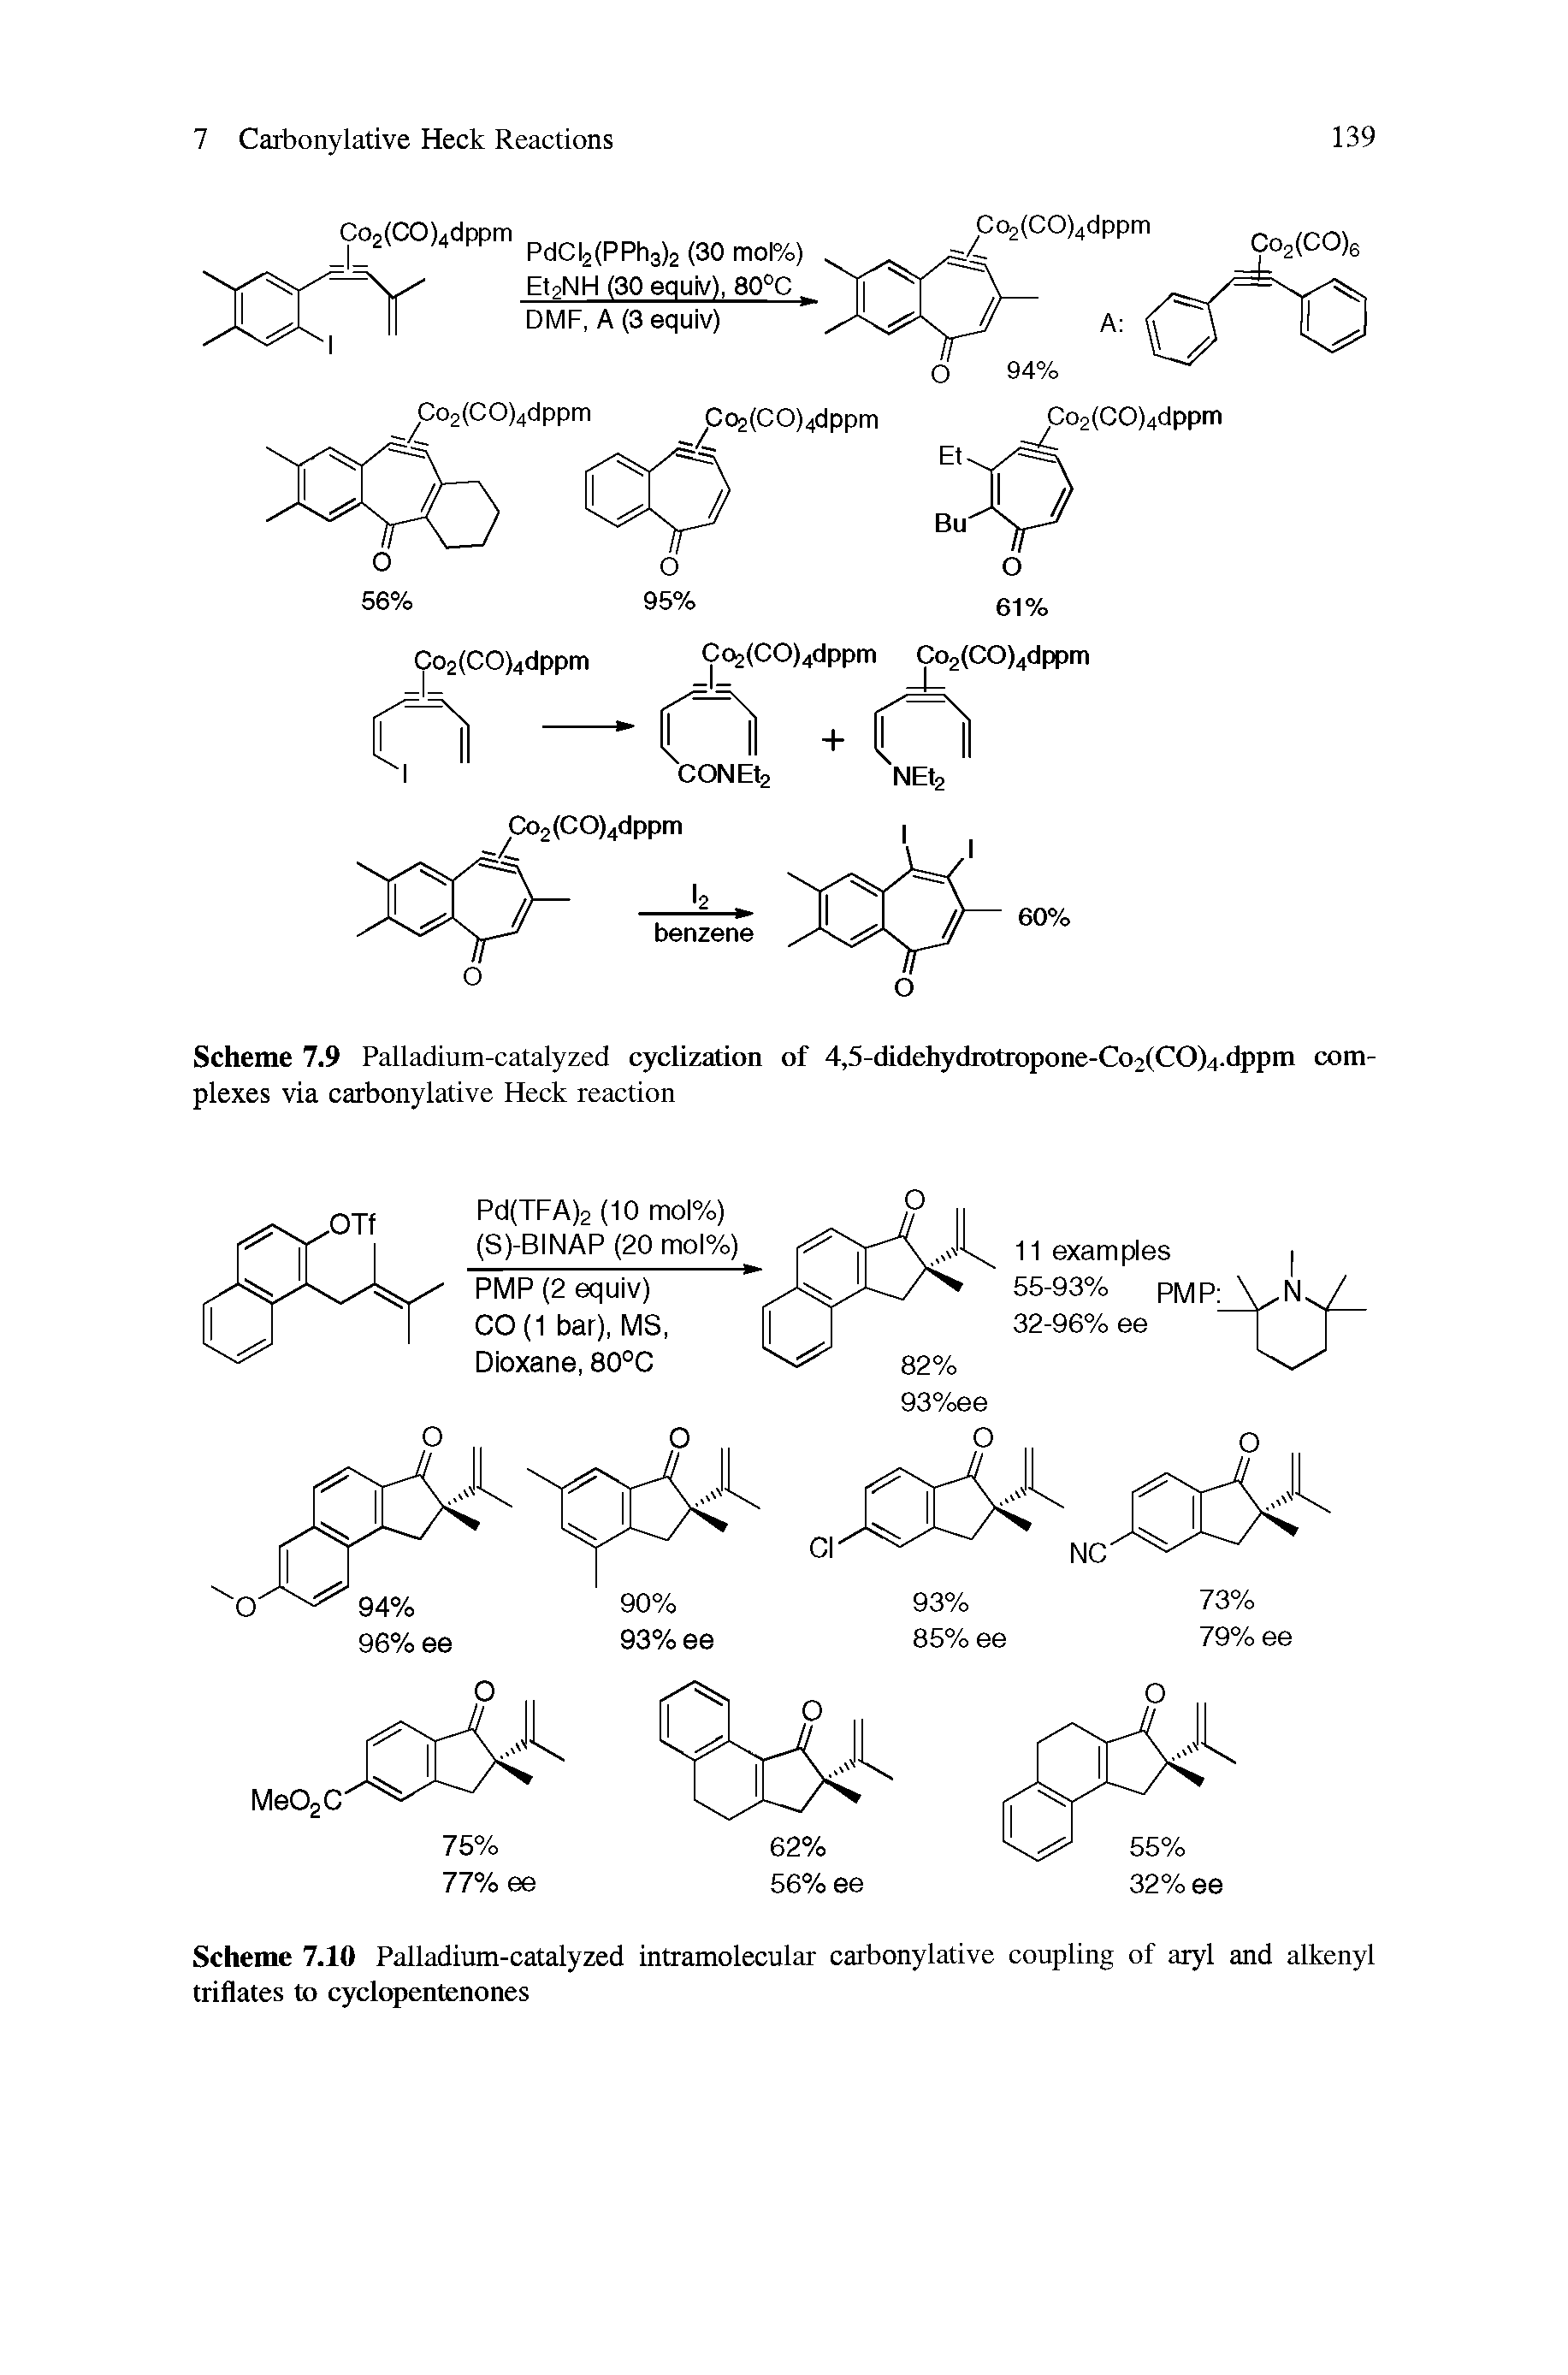 Scheme 7.10 Palladium-catalyzed intramolecular carbonylative coupling of aryl and alkenyl triflates to cyclopentenones...